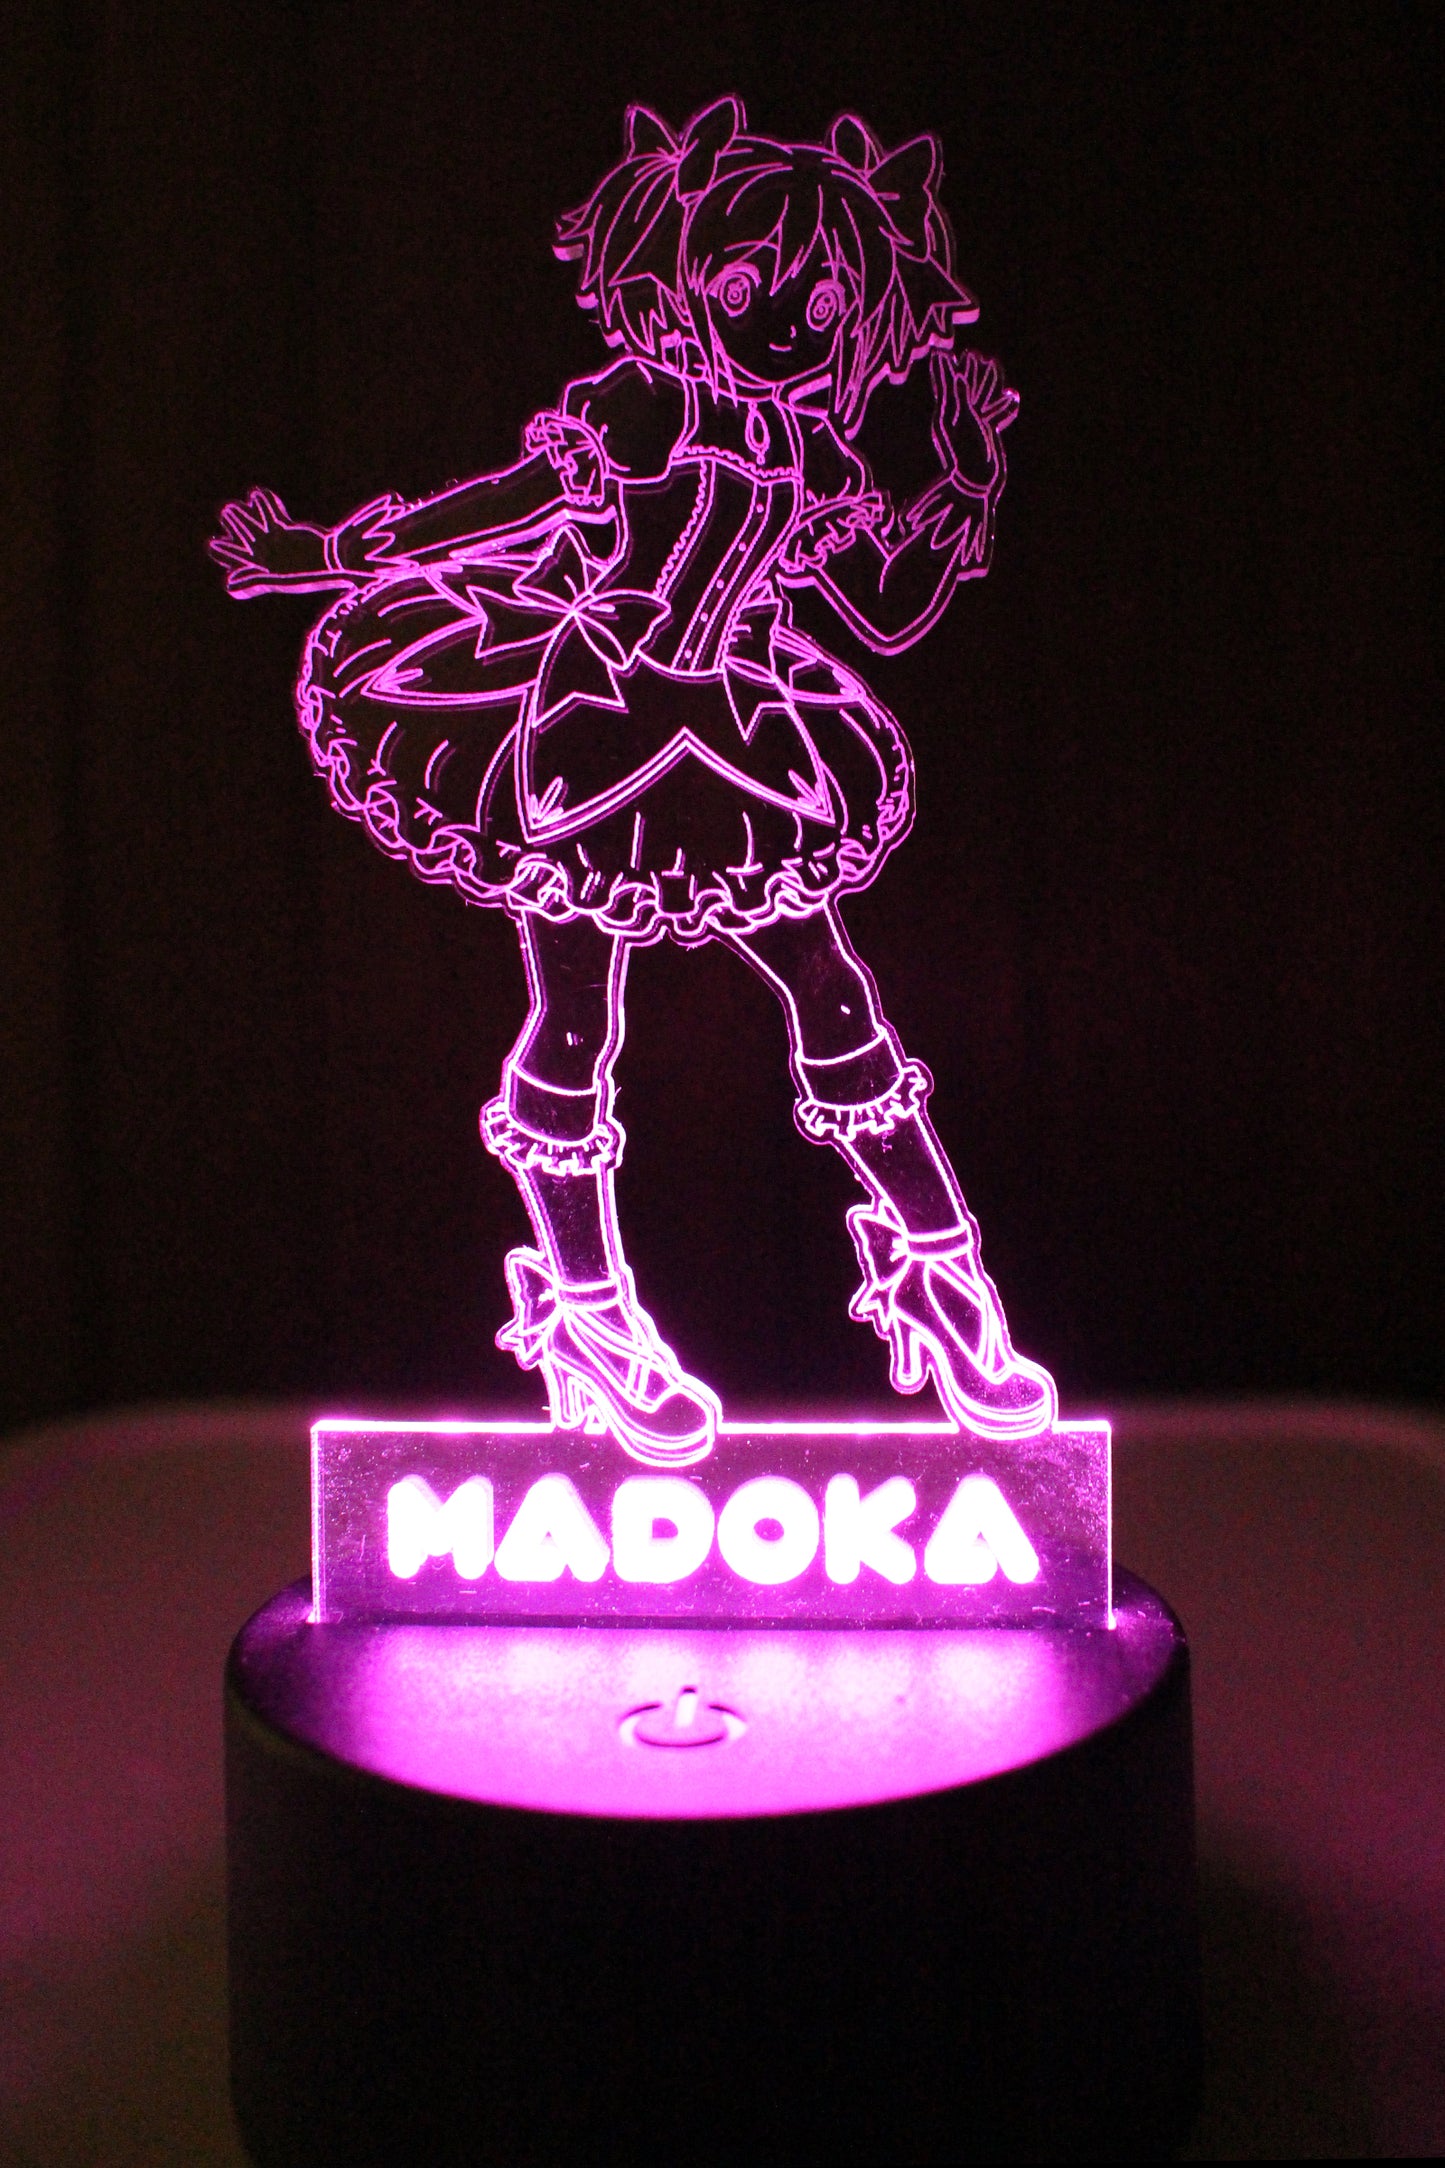 Madoka Magica